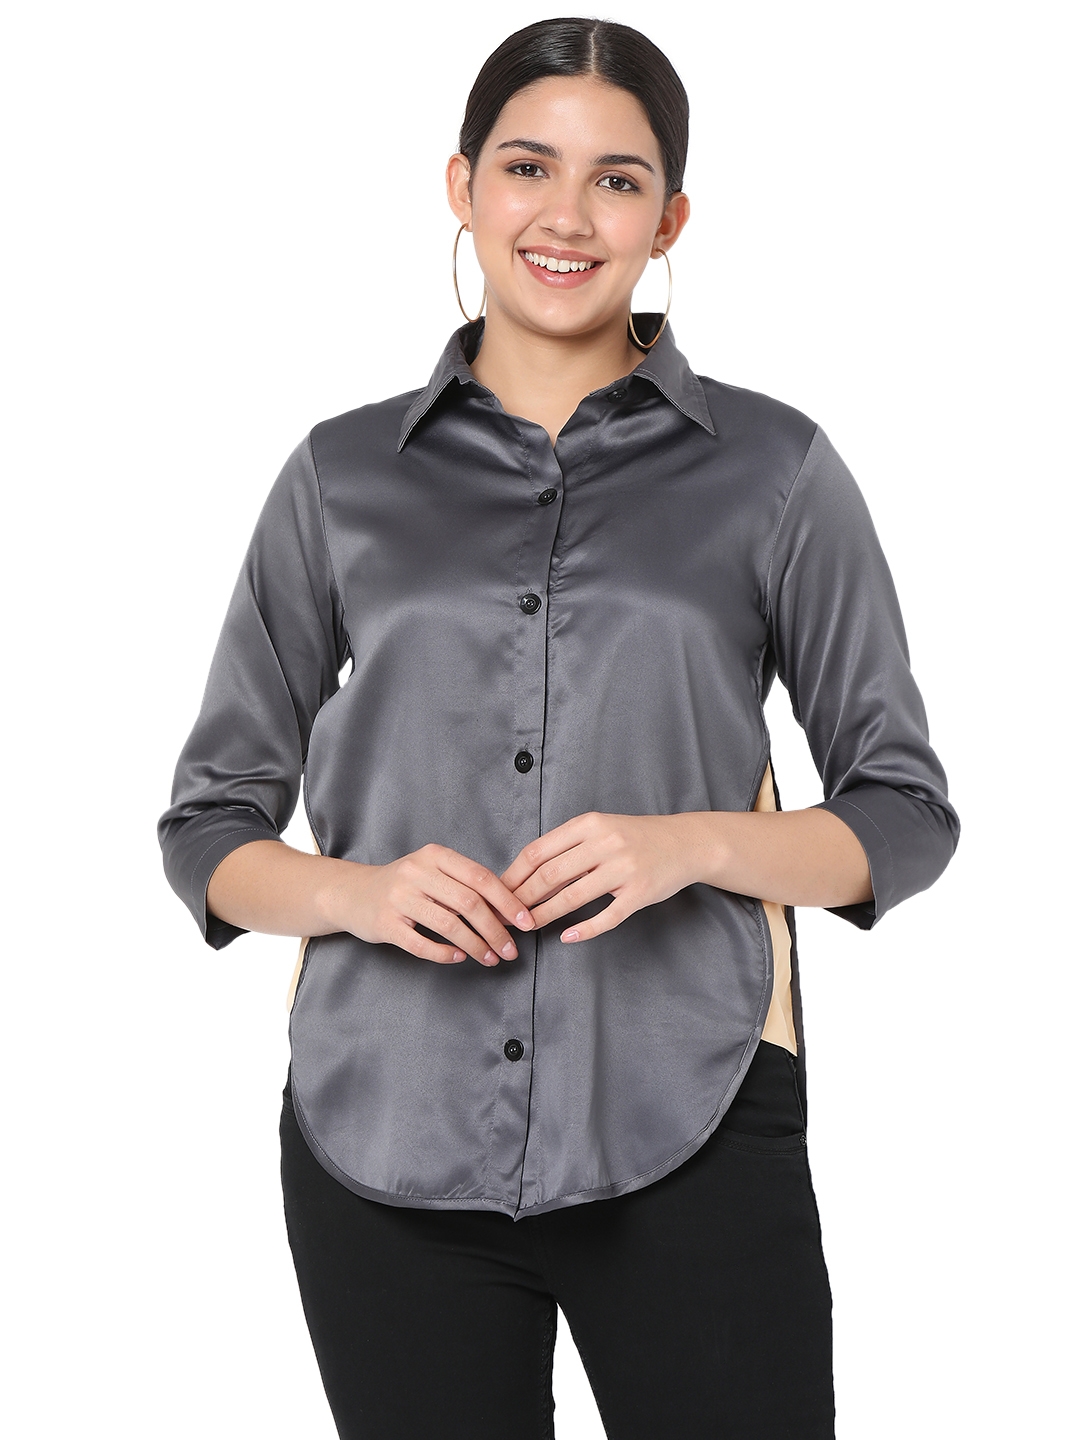 Smarty Pants | Smarty Pants women's silk satin grey color apple cut formal shirt.